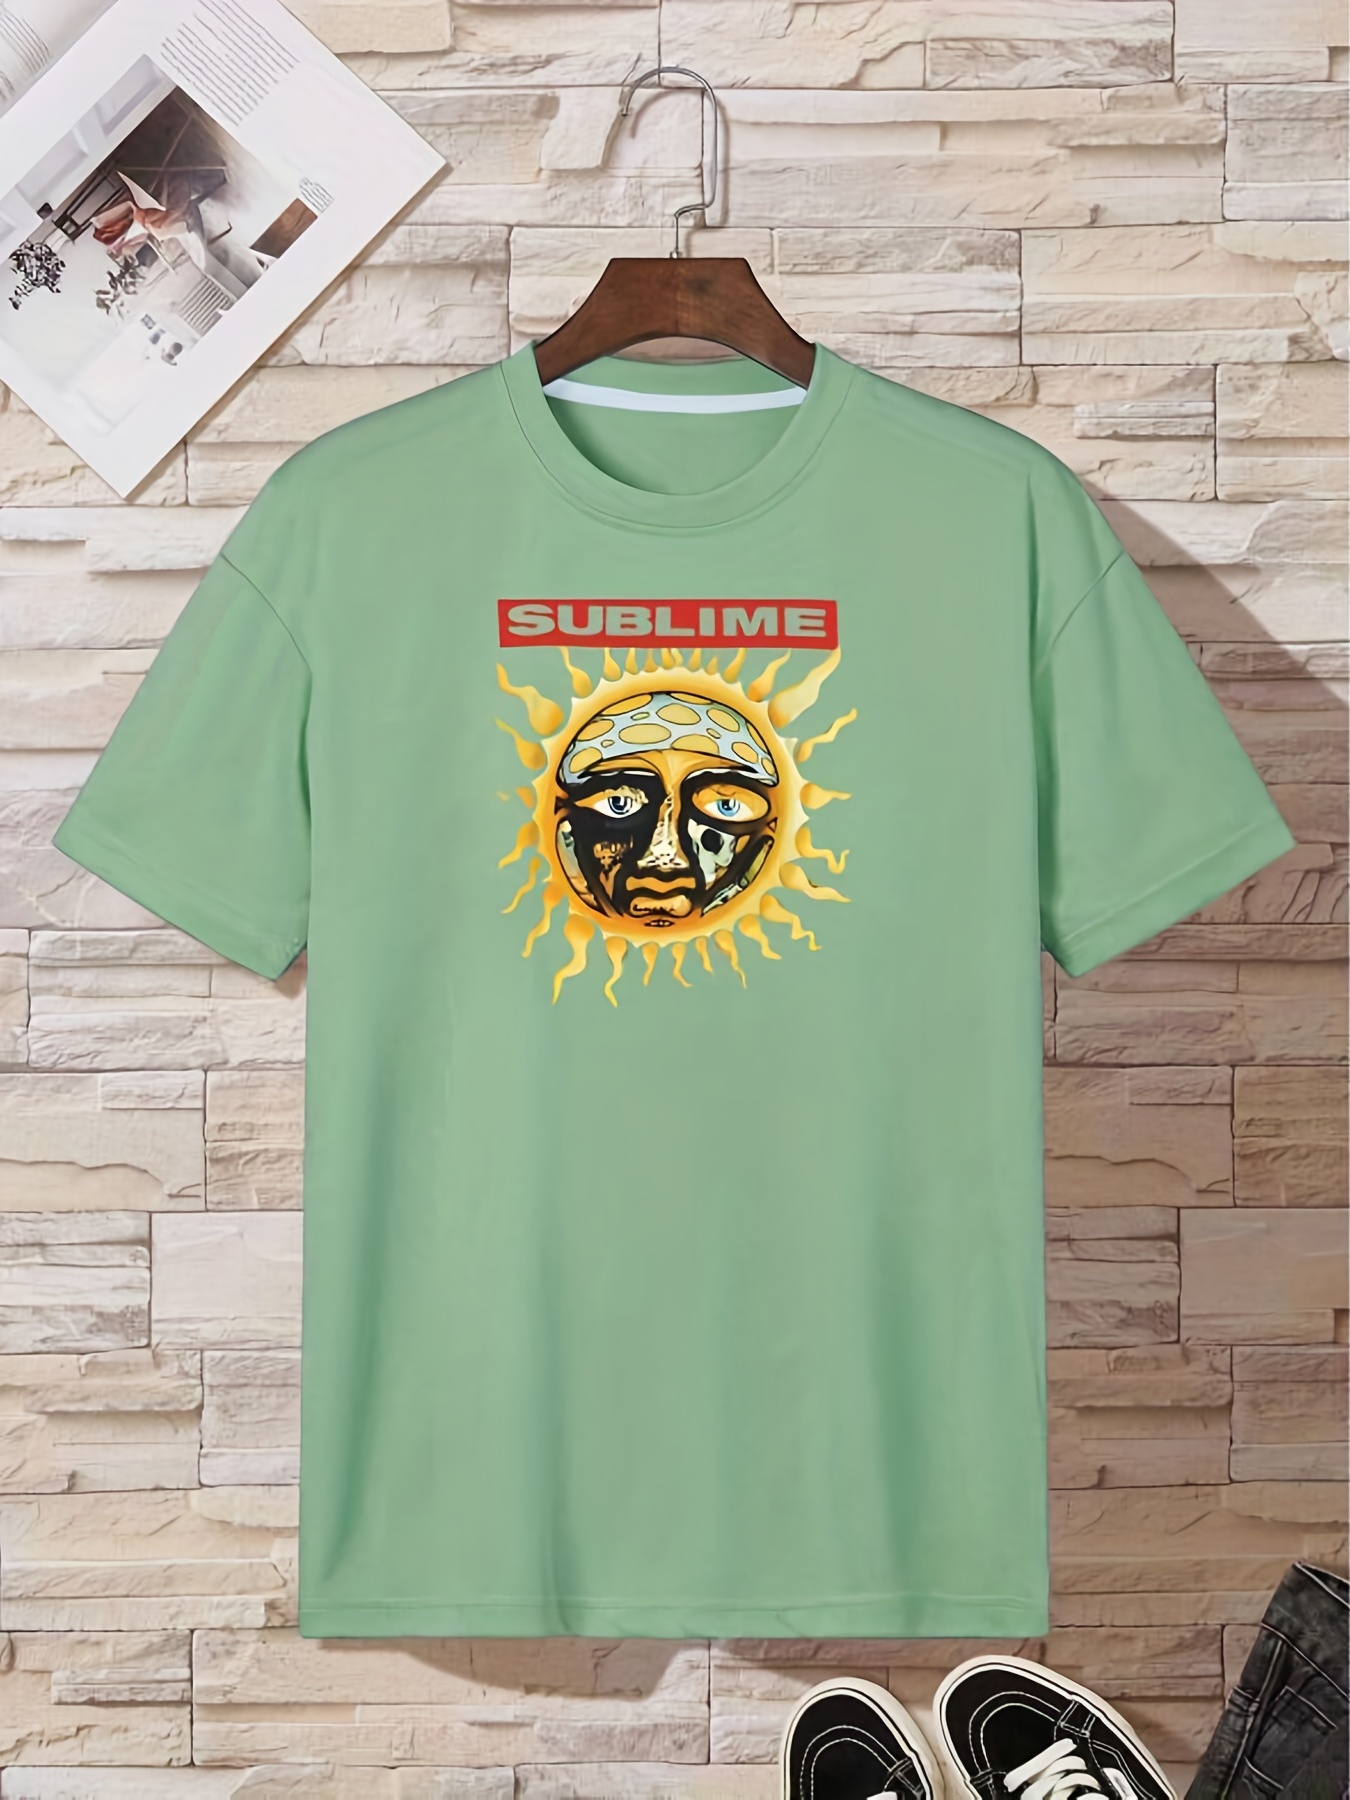 Sublime Cartoon Sun Men's T-shirt For Summer Outdoor, Casual